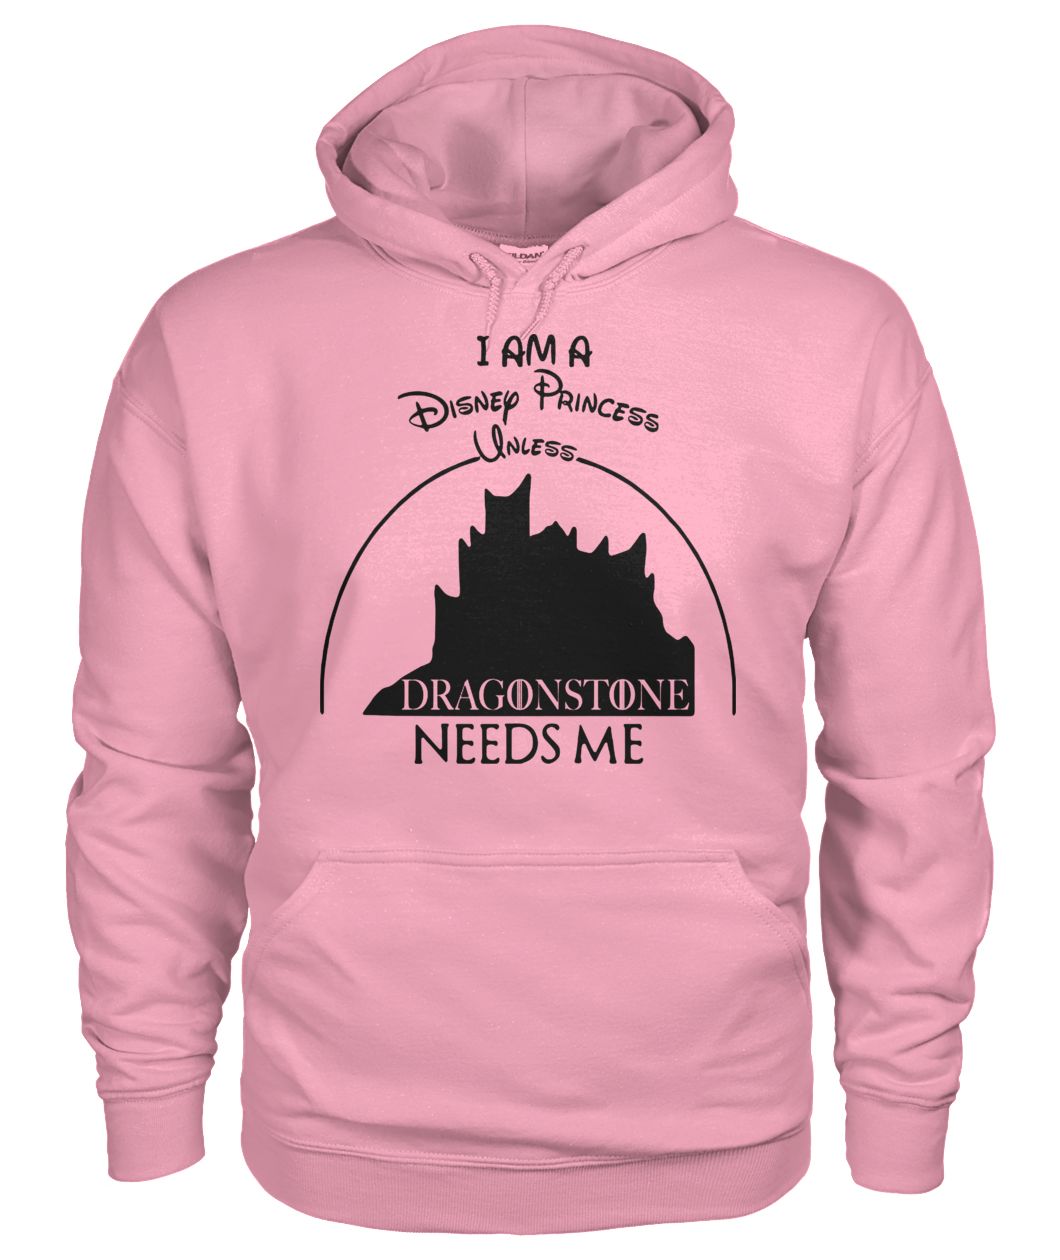 I am a disney princess unless dragonstone needs me gildan hoodie